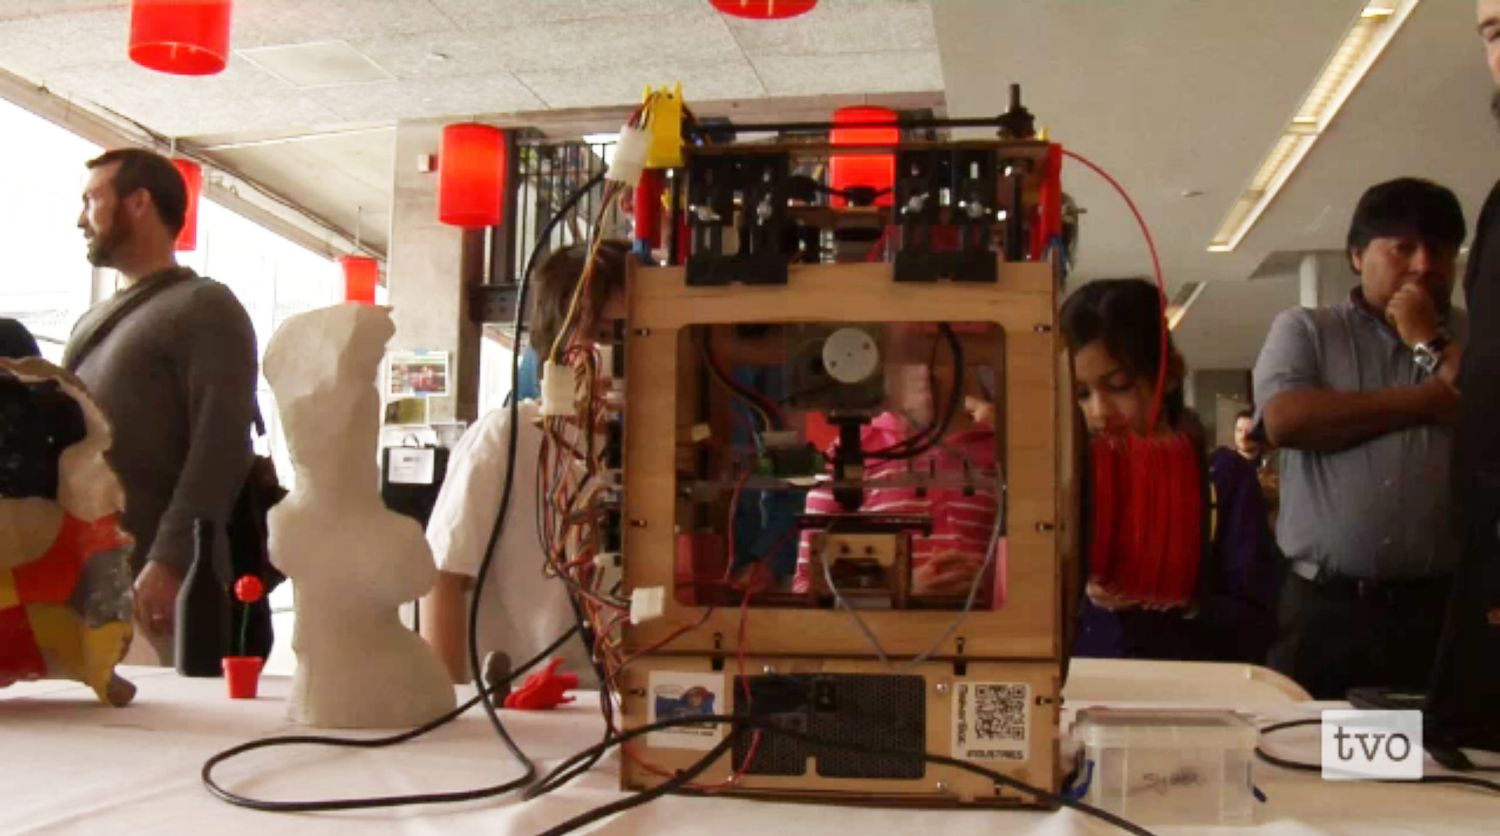 MakerBot Cupcake 3D printer in action